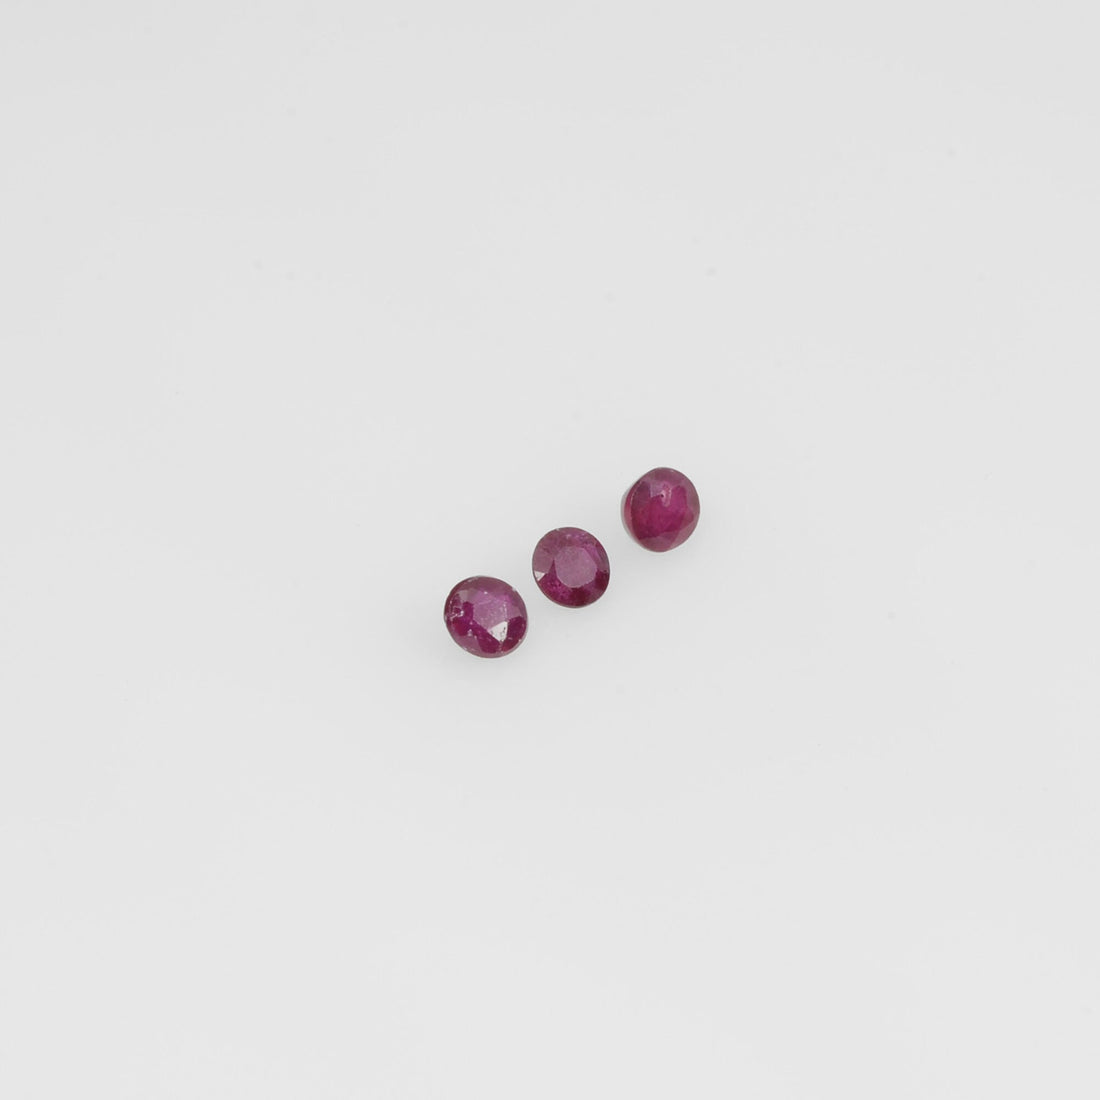 1.5-4.4 mm Lots Natural Ruby Loose Gemstone Round Cut